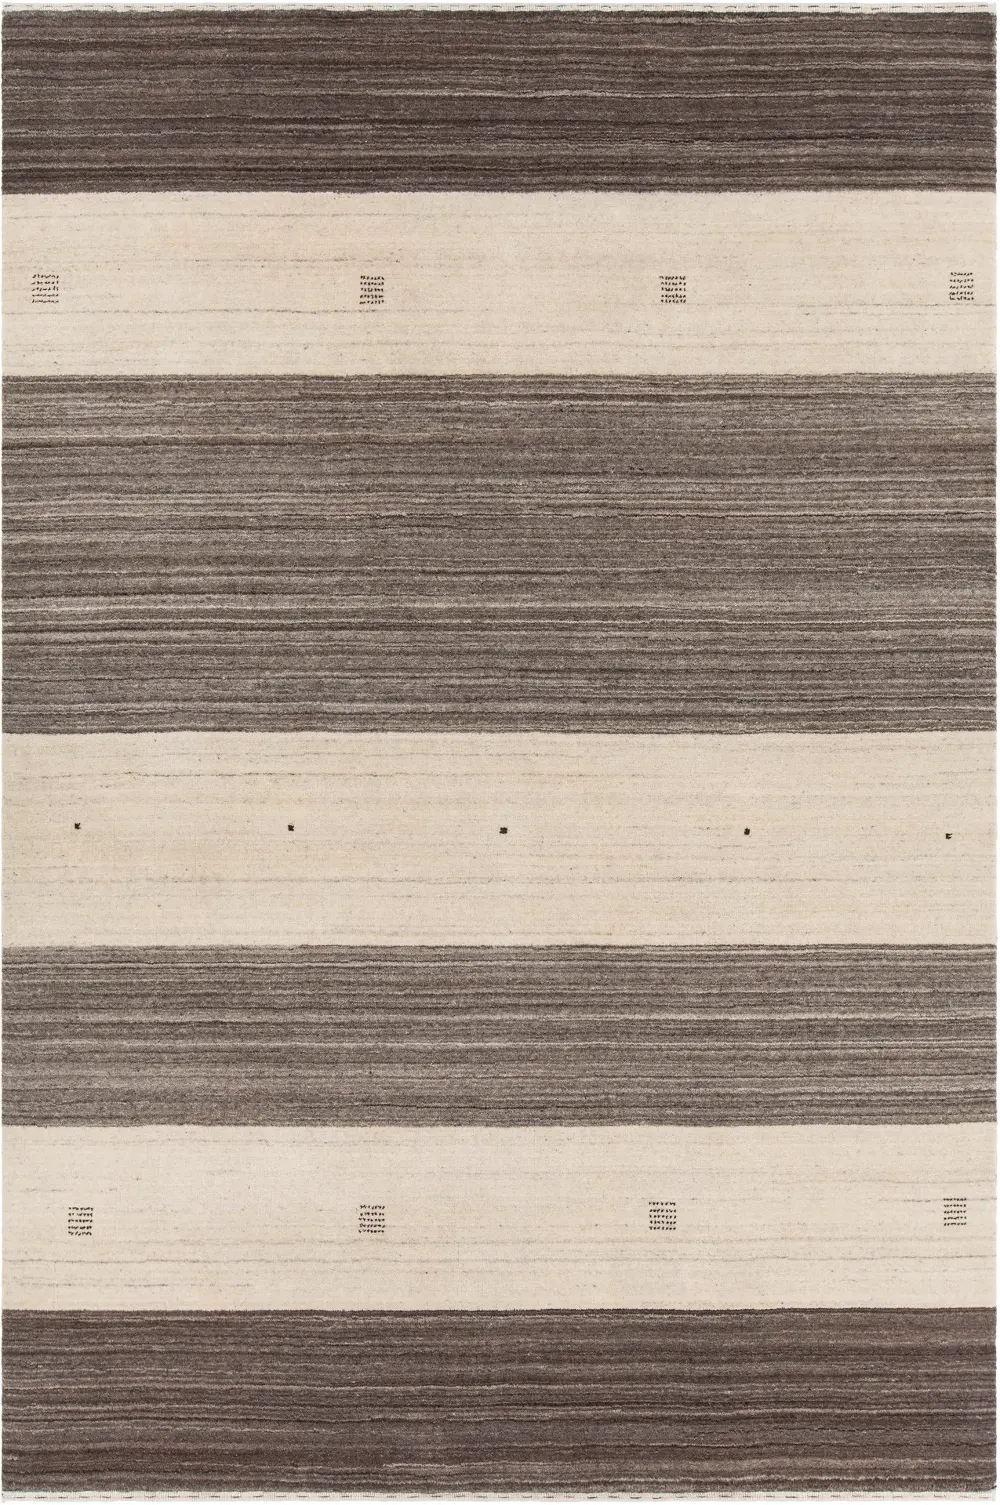 5 x 8 Medium Wide Striped Brown and Beige Area Rug - Elantra-1